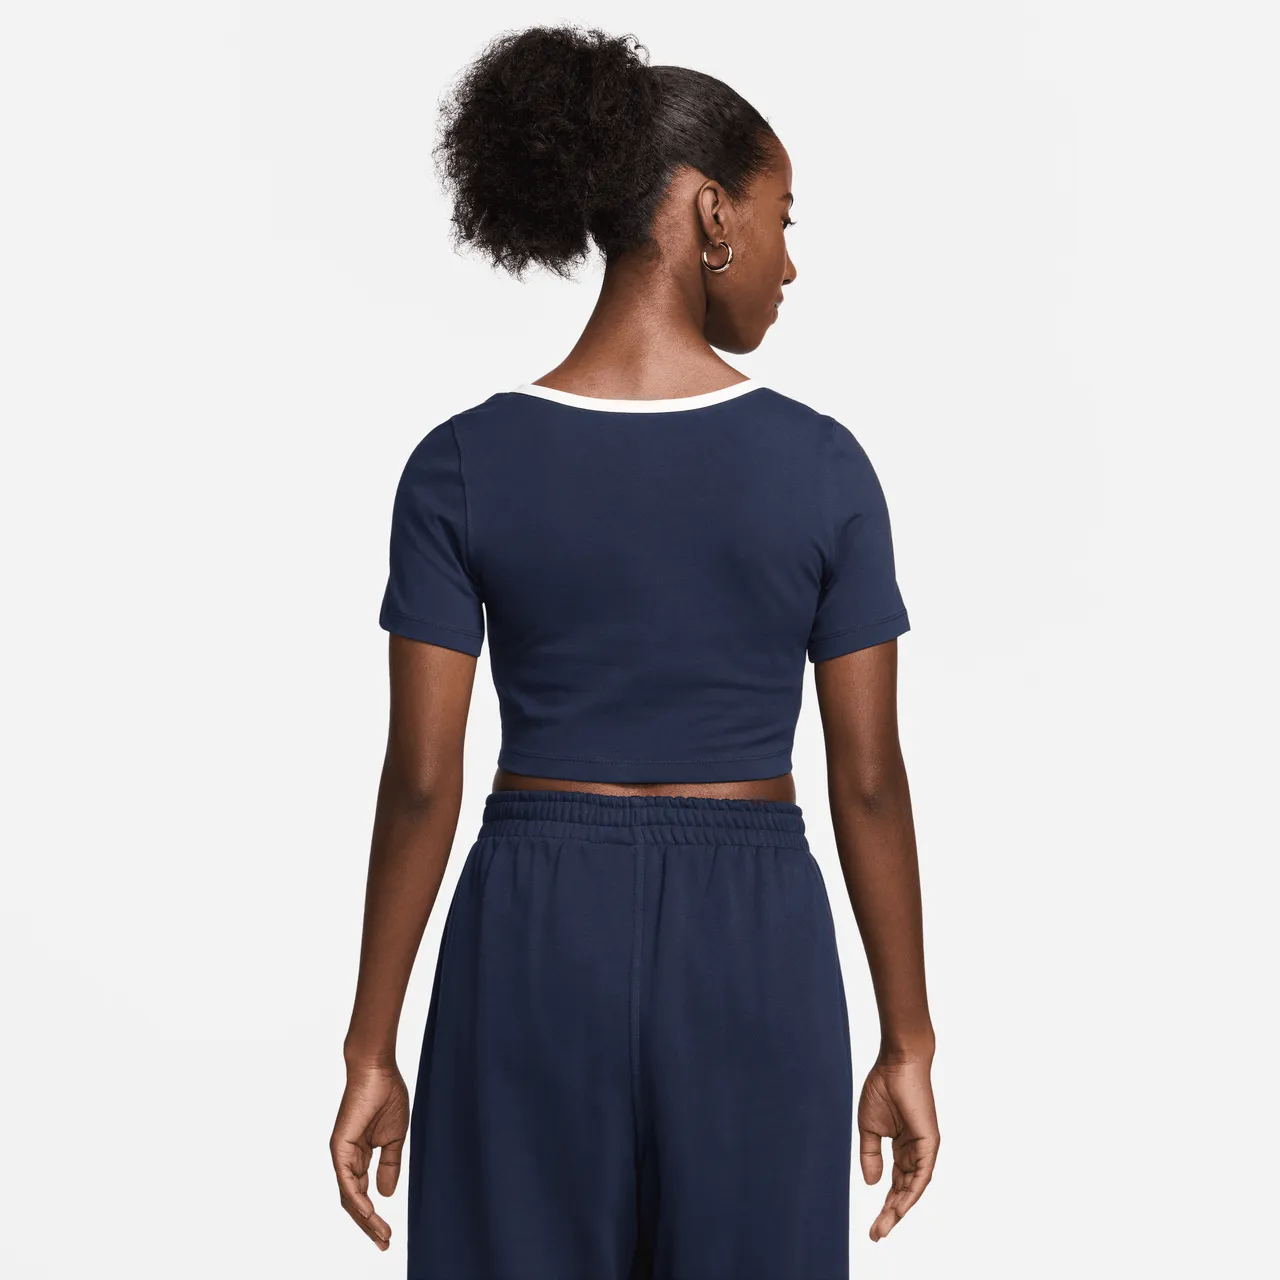 Nike Sportswear cropped T-shirt met vierkante hals voor dames - Blauw